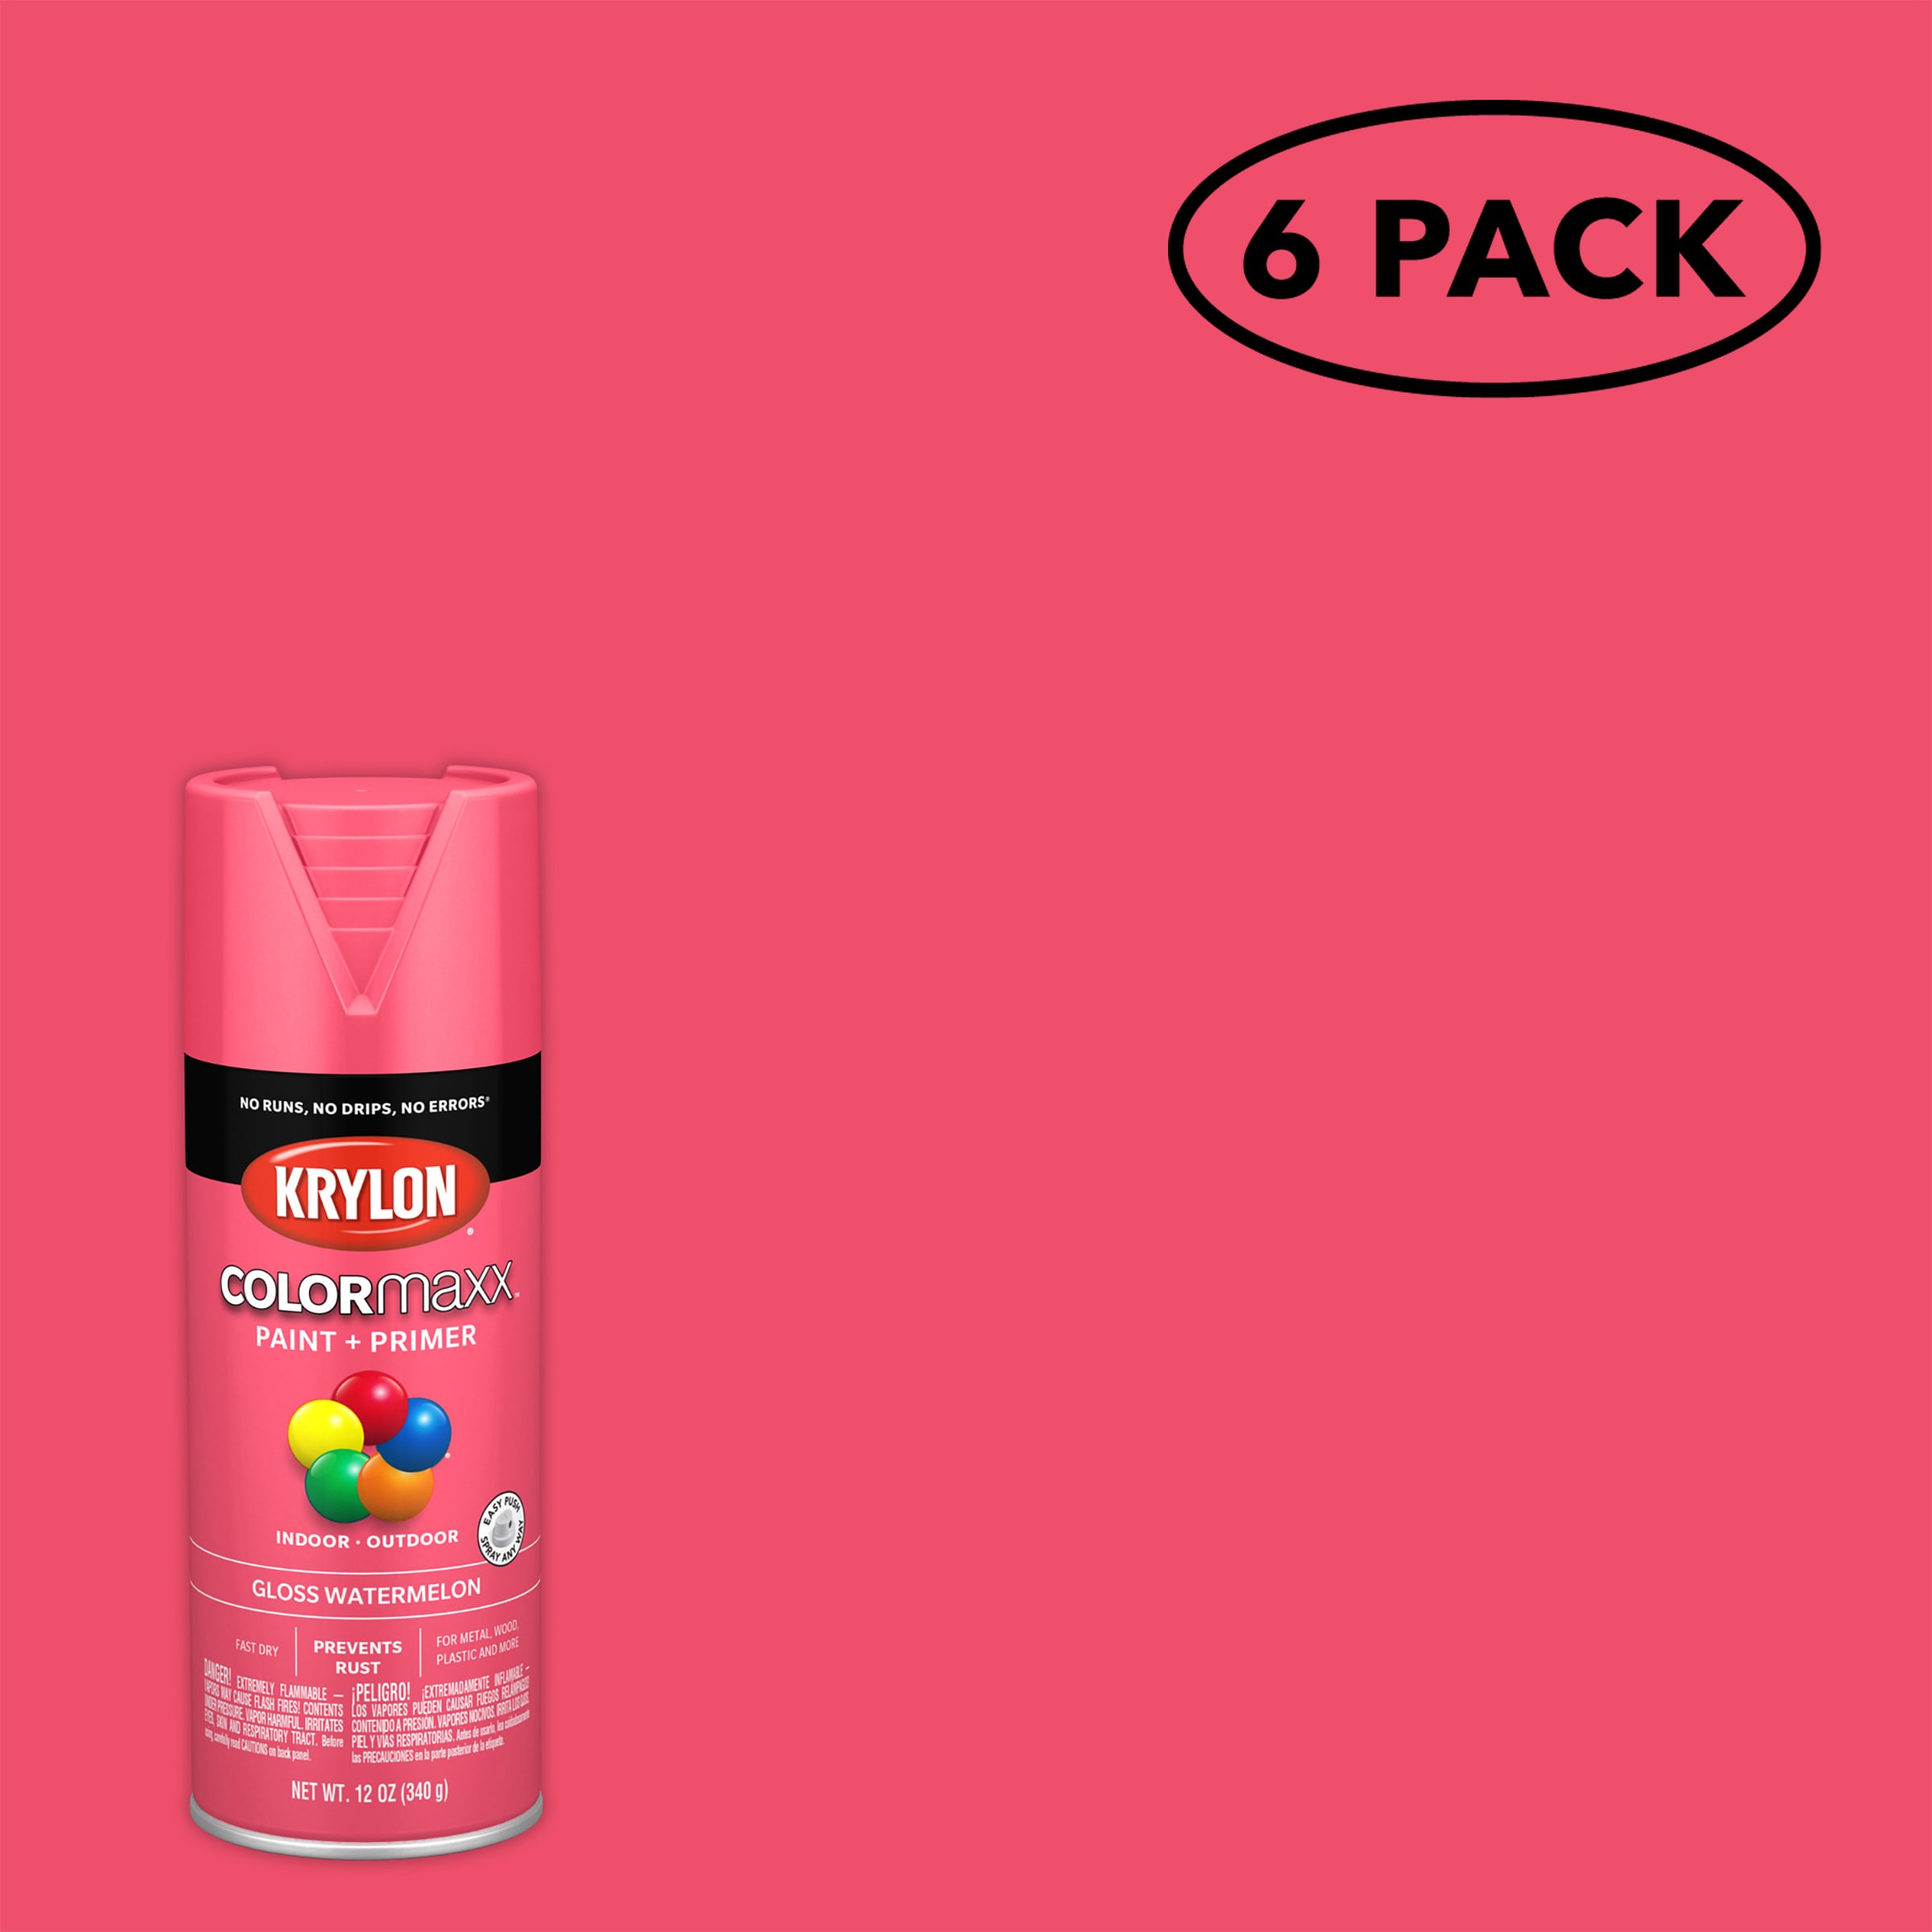 Krylon CHALKY FINISH 12 Oz. Ultra Matte Chalk Spray Paint, Bonnet Pink -  Gillman Home Center